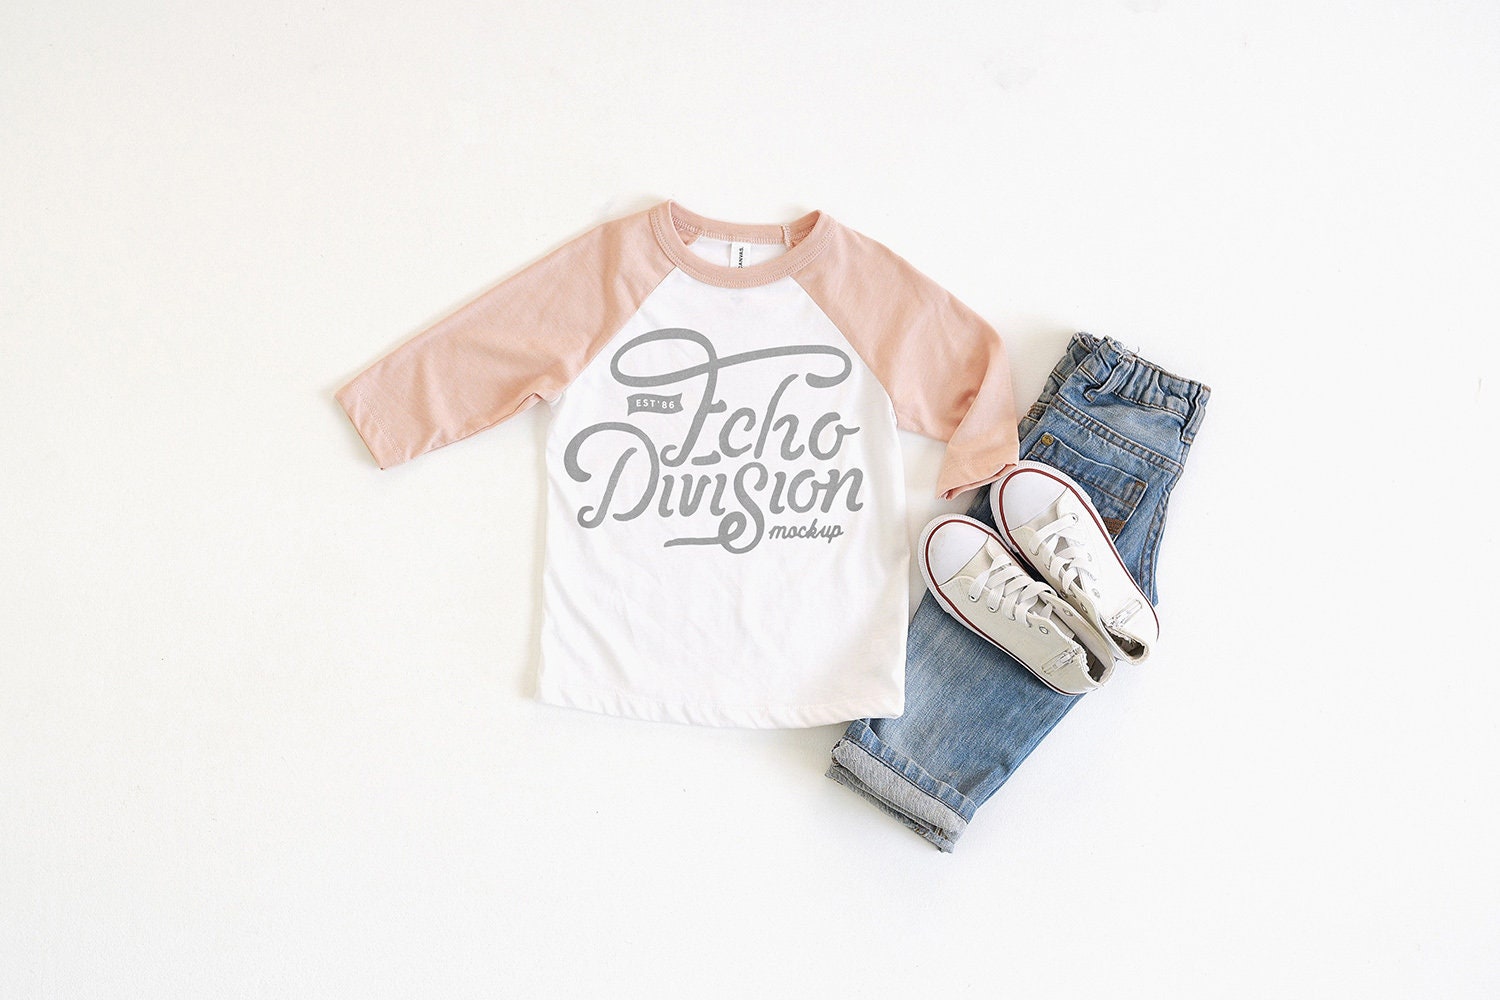 95 Polyester Unisex Toddler Sublimation Blank Shirt cotton Feel / Toddler  Shirt/ Toddler Sublimation Shirts / Sublimation Blanks 